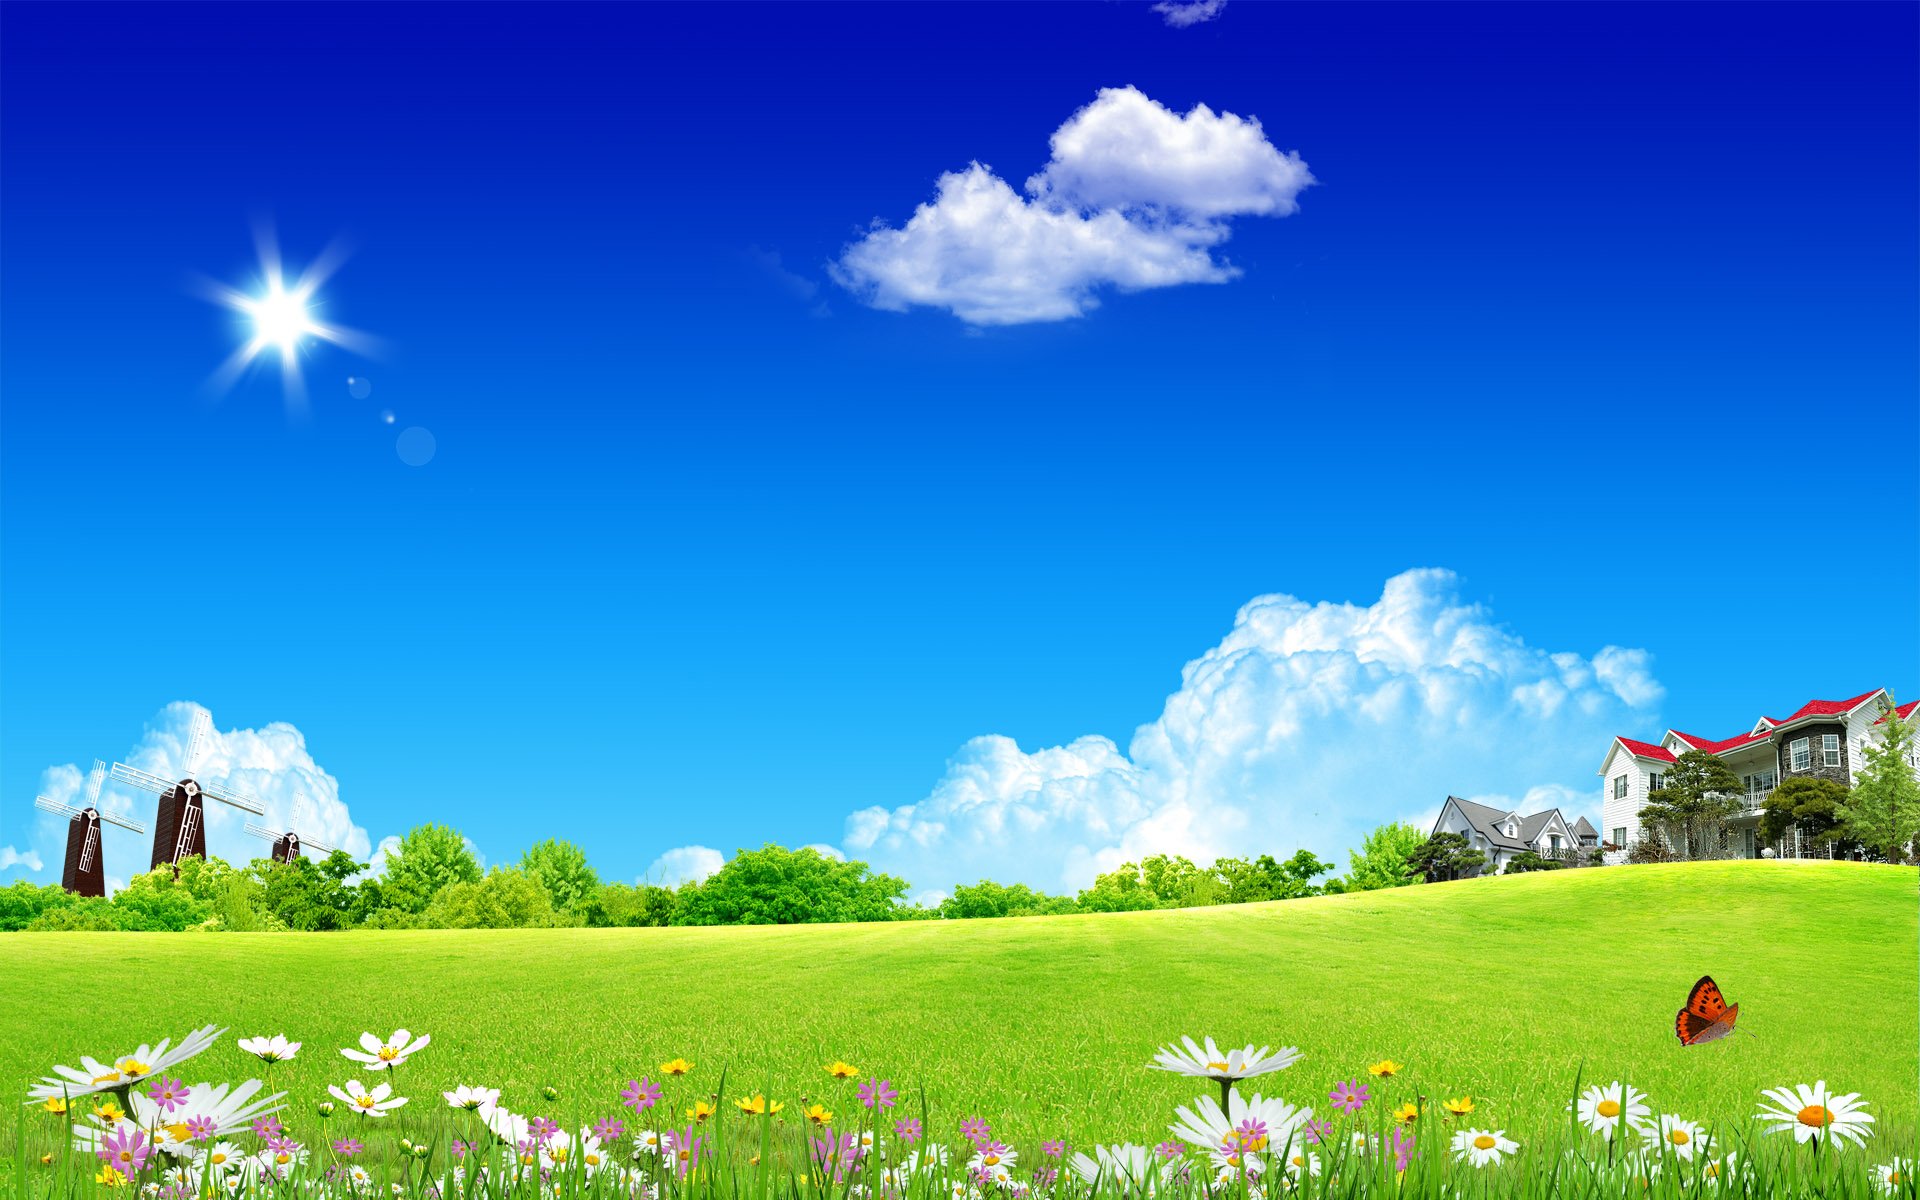  mi9comfree summer fantasy landscape for desktop wallpaper 80964html